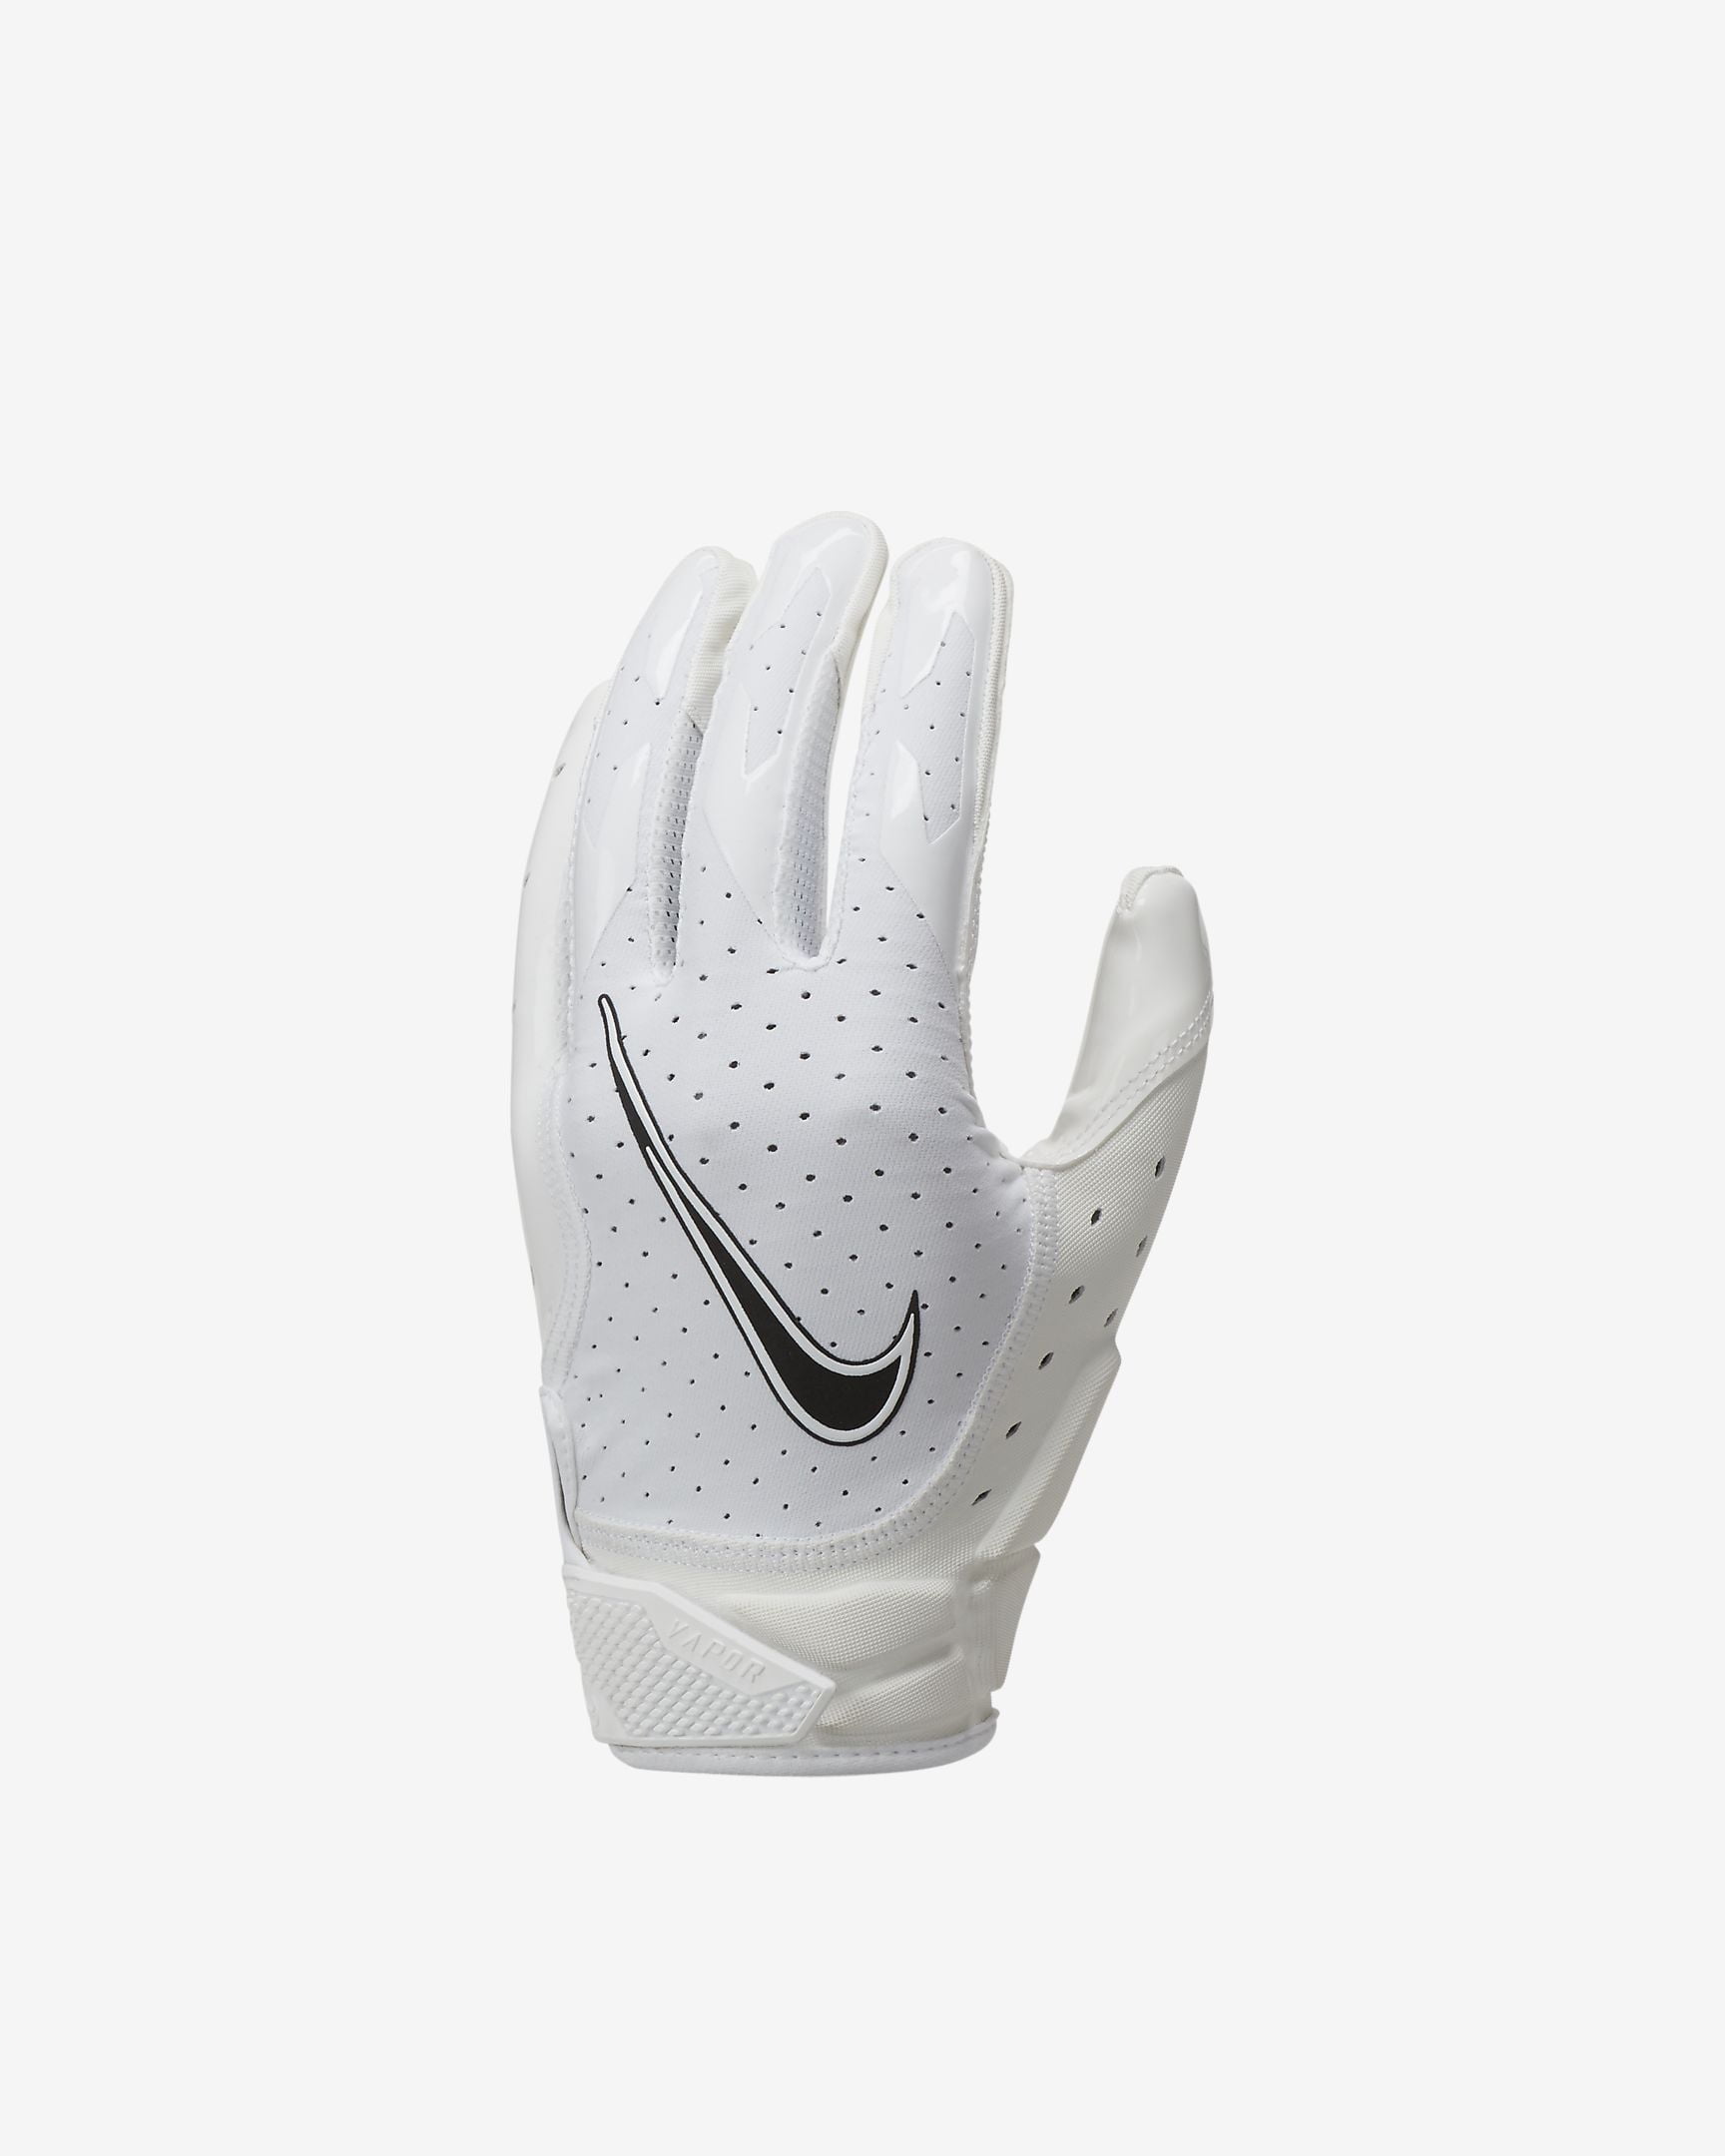 Trein Voorlopige censuur Nike Vapor Jet 6.0 Adult Football Gloves - Walmart.com